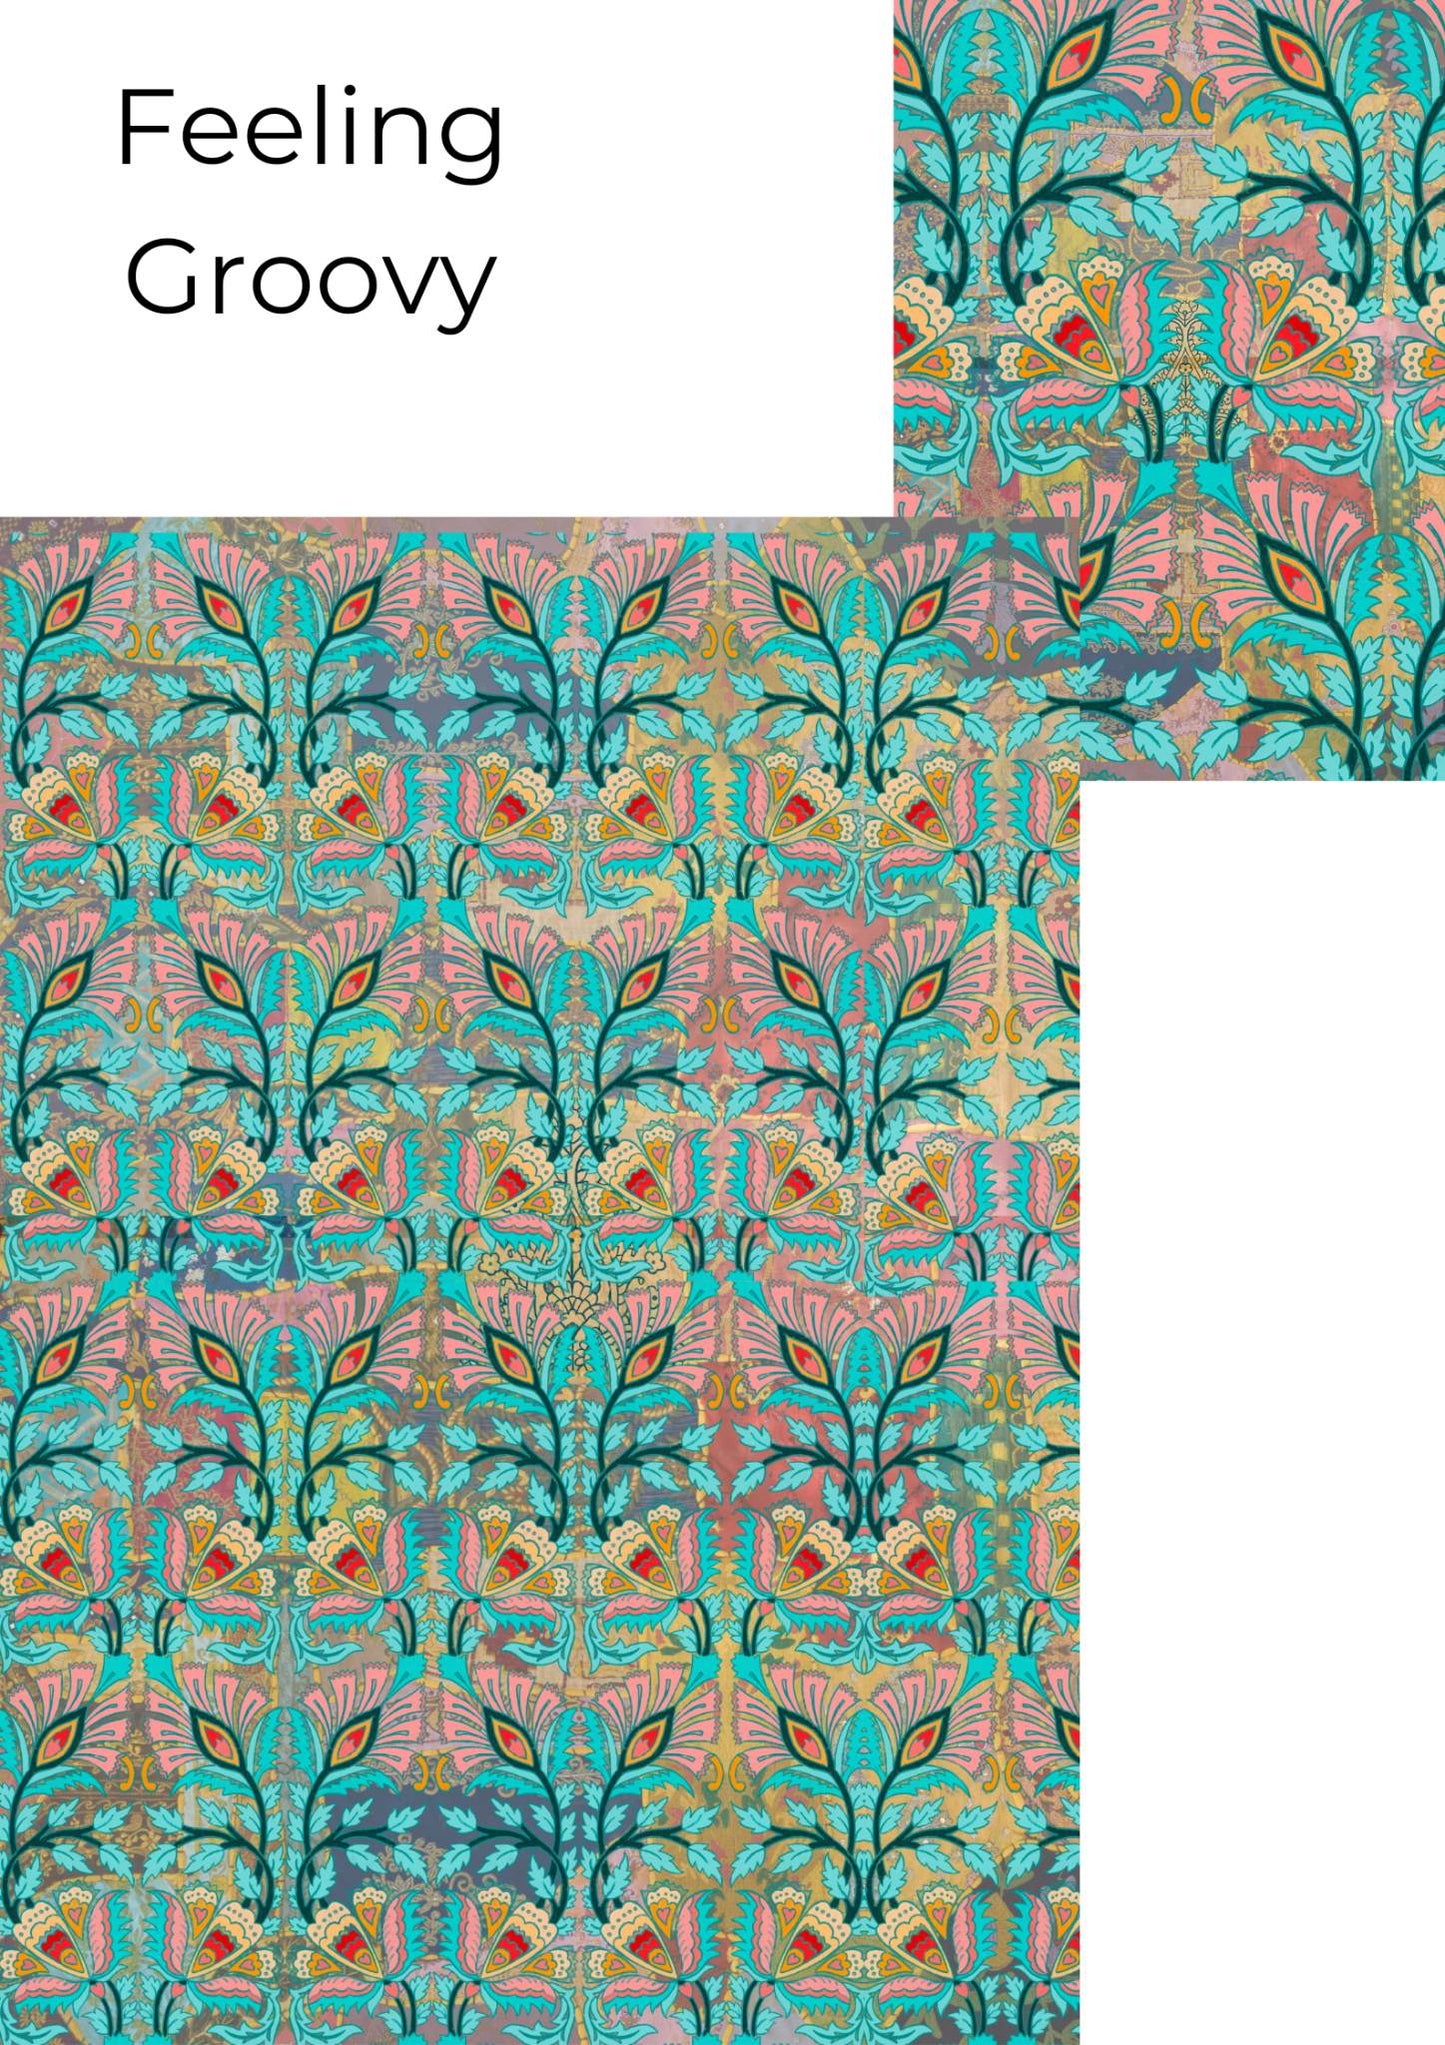 Feeling Groovy- Marley Magic decoupage paper